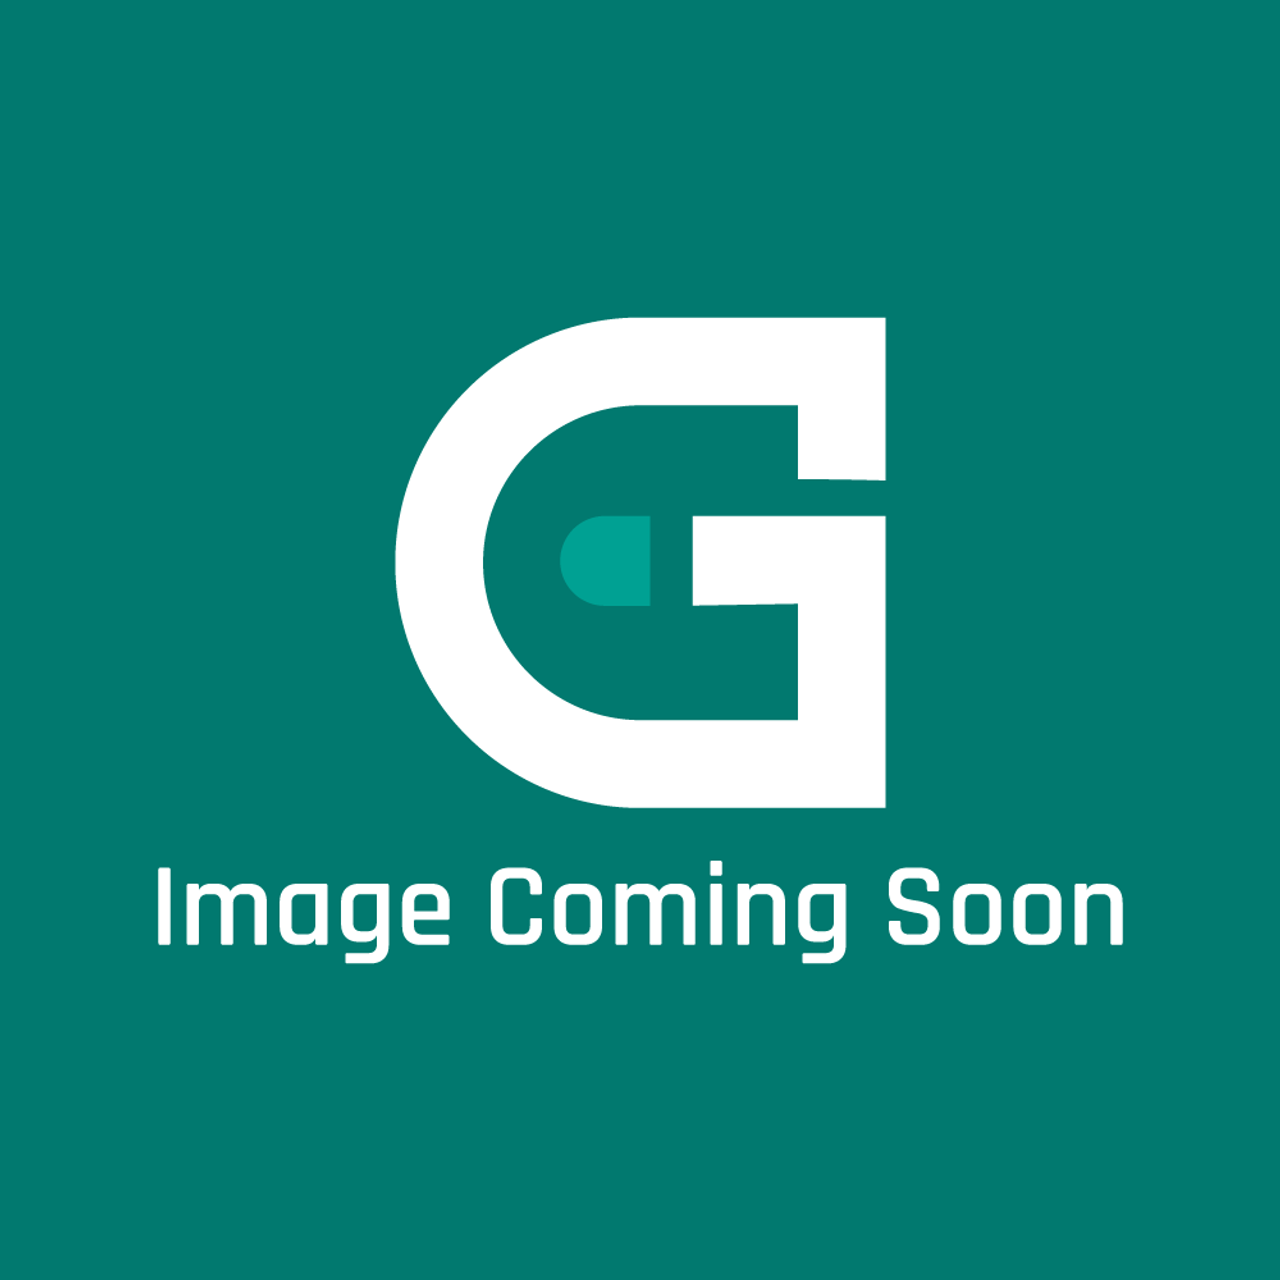 AGA Marvel A4986 - Hob Reg (40Er102C1) Module - Image Coming Soon!